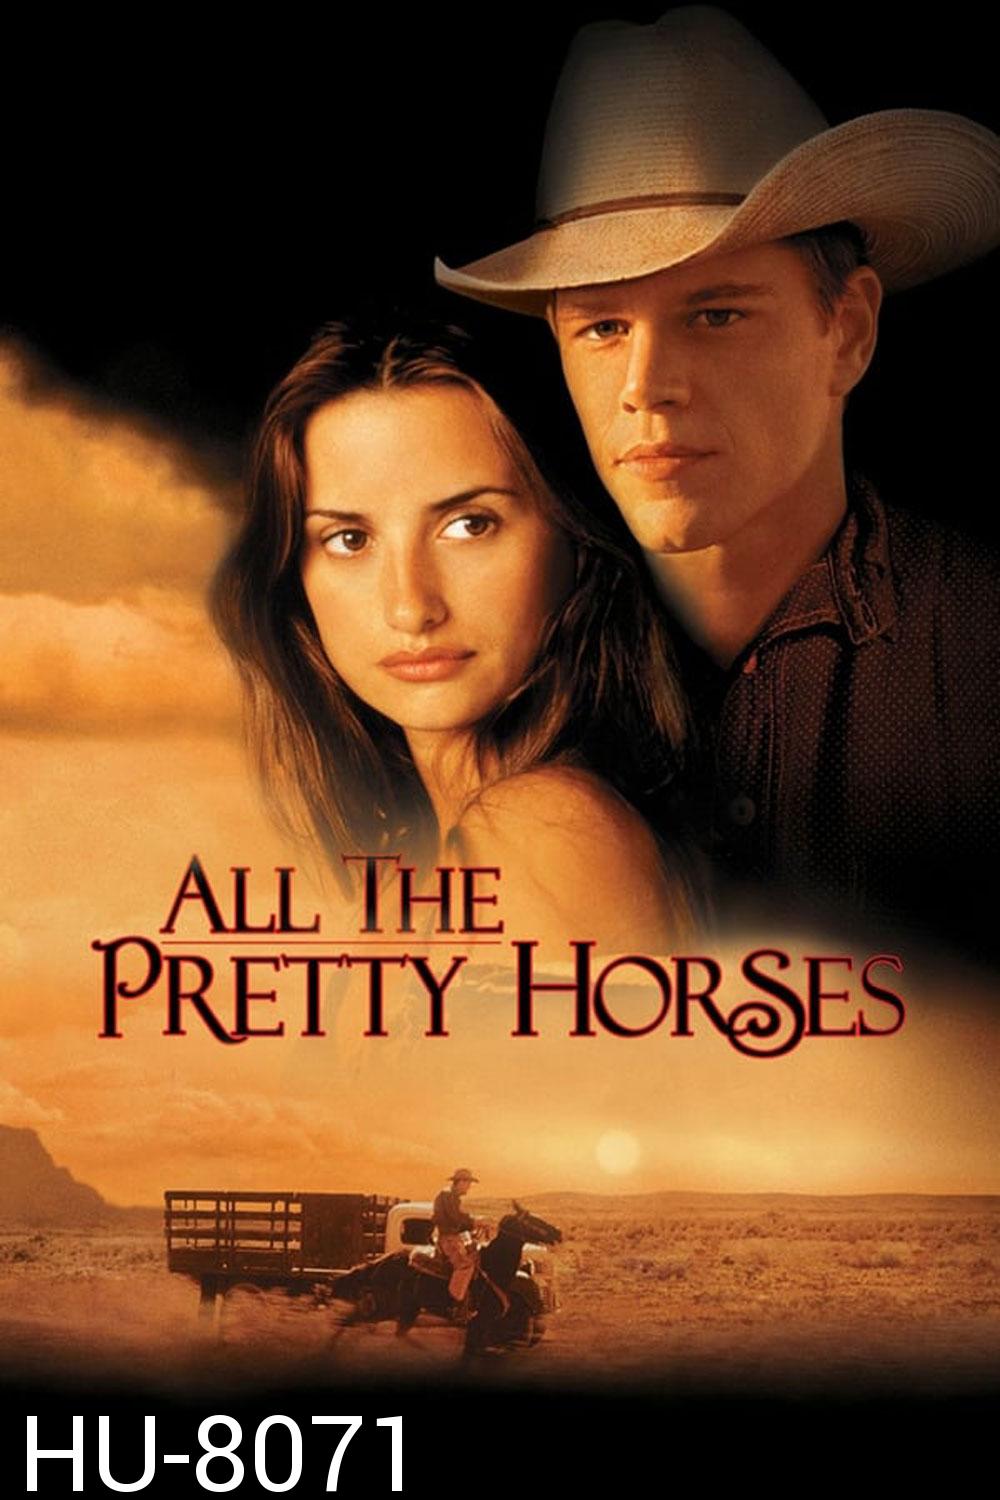 All the Pretty Horses (2000)